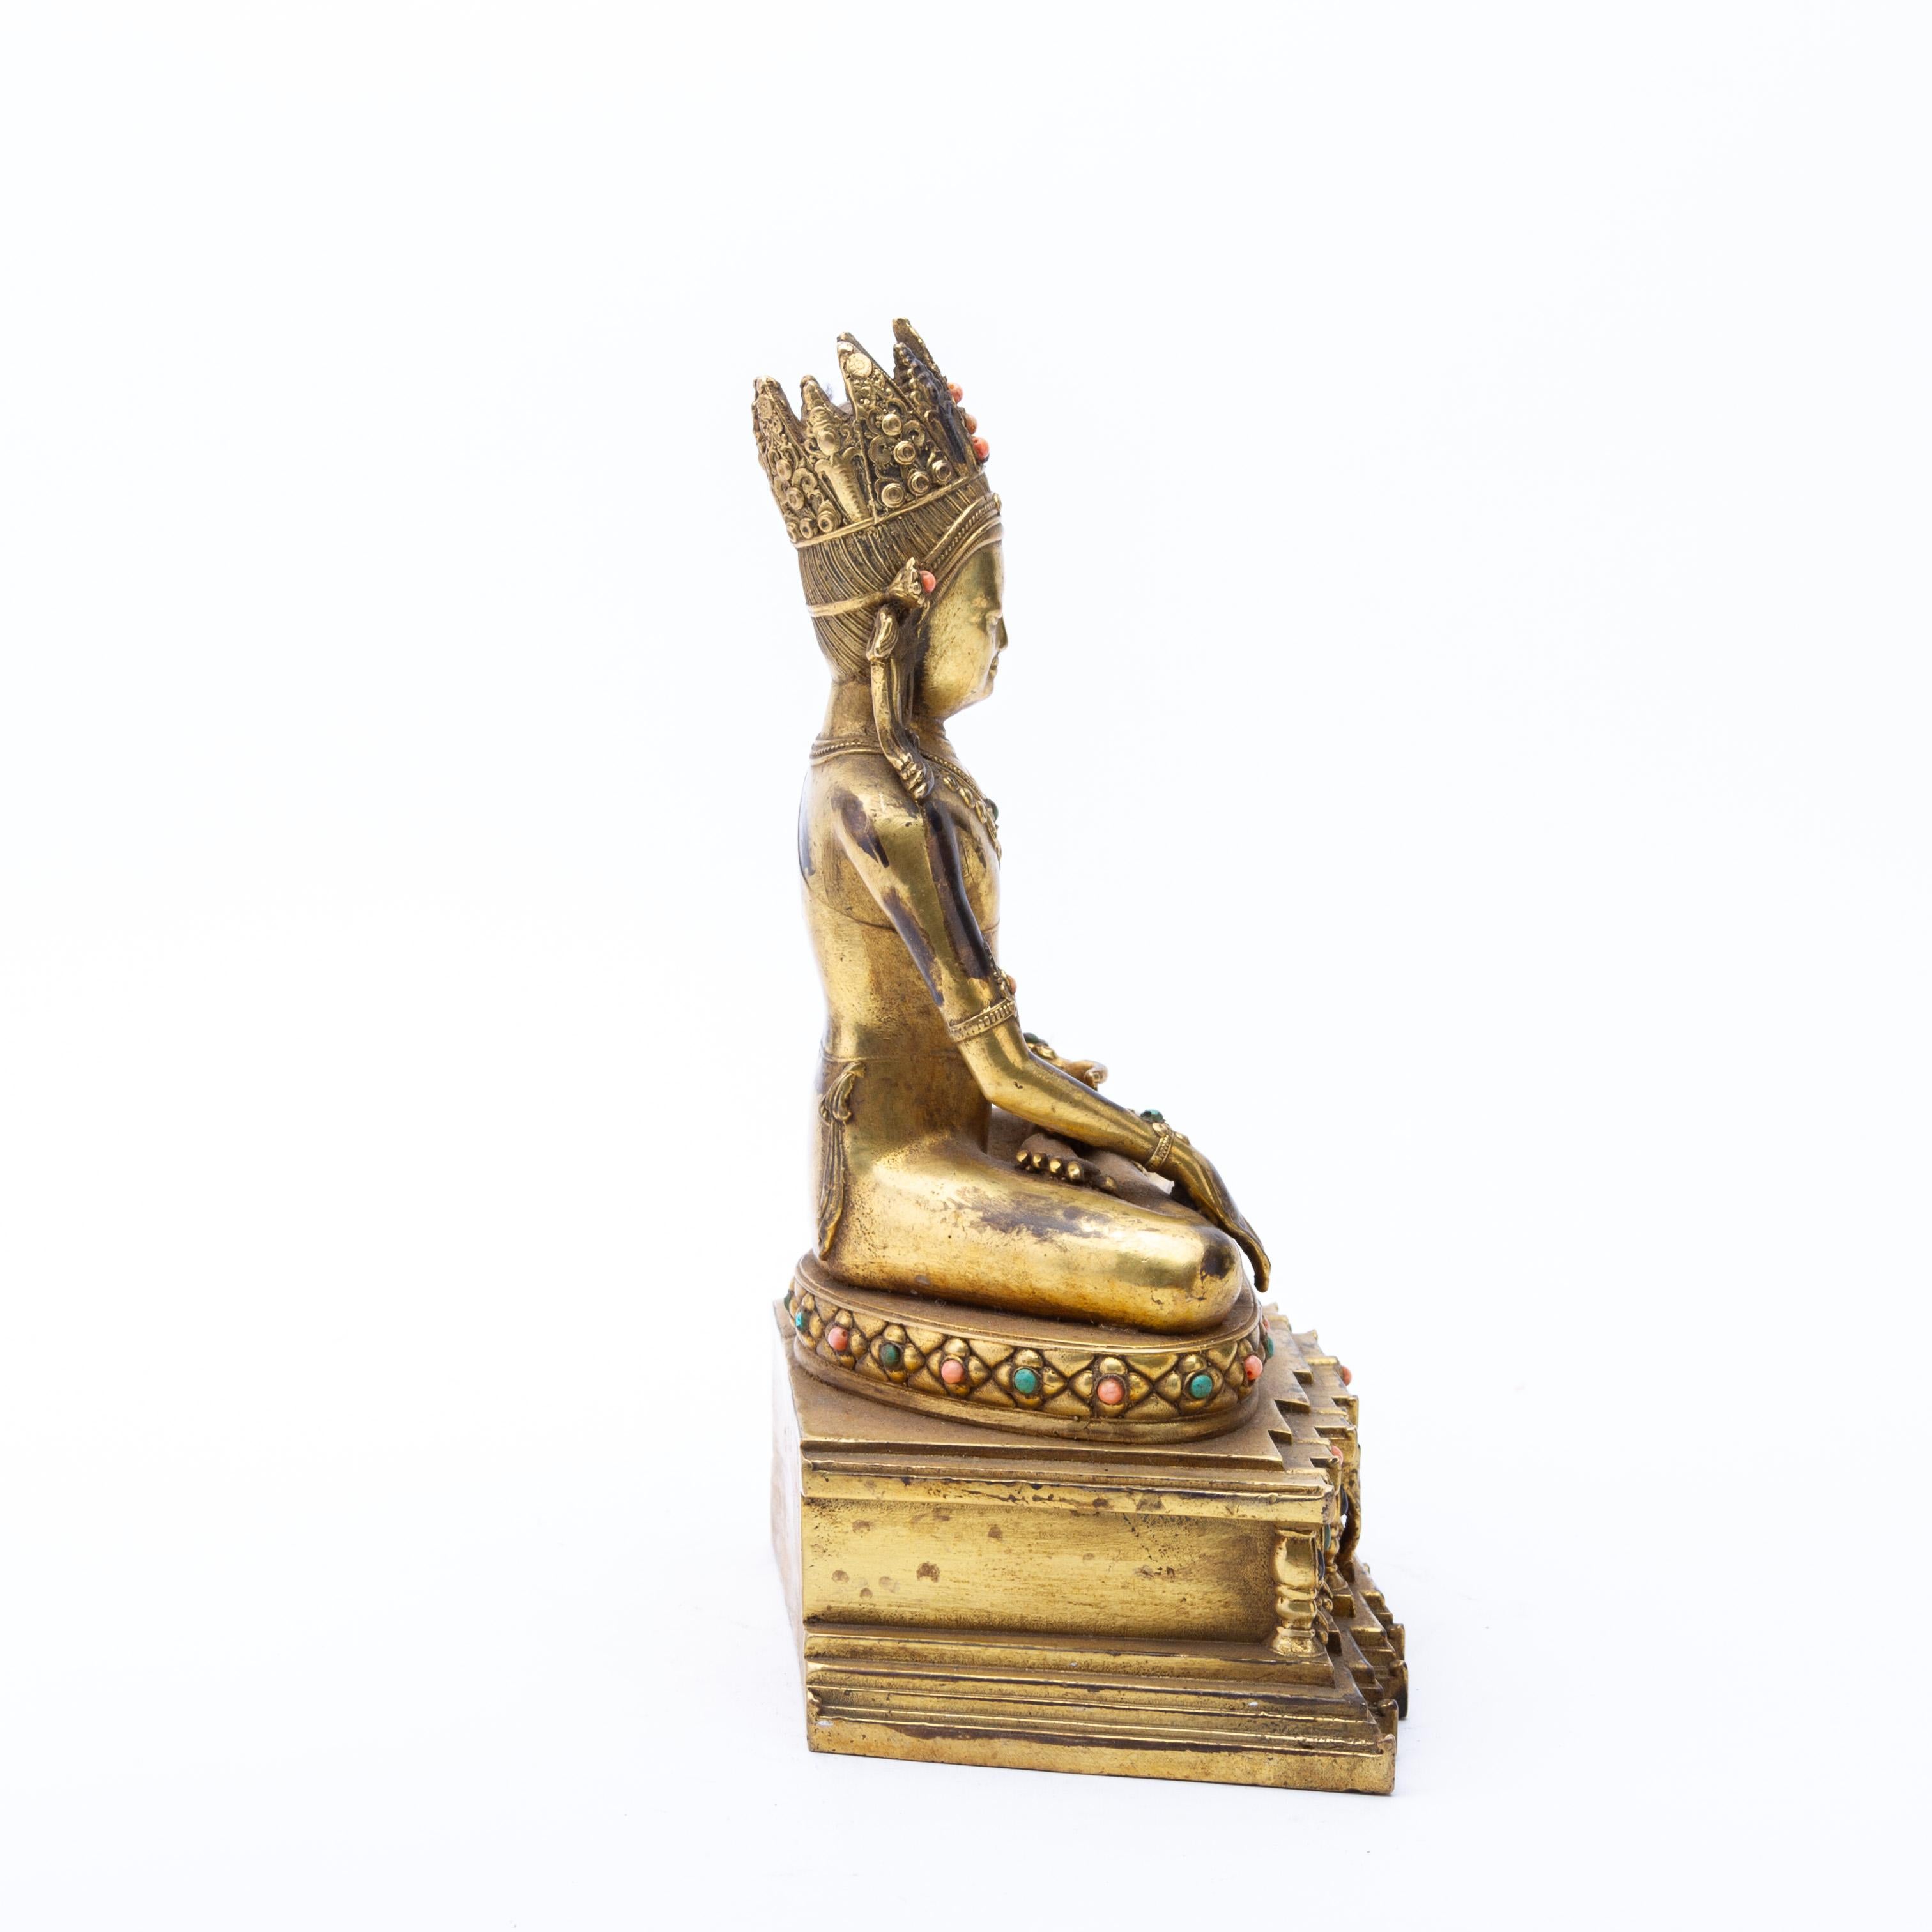 Tibetan Gilt Bronze Hindu Buddhist Sculpture of Buddha Late 19th C
Good condition
Free international shipping.